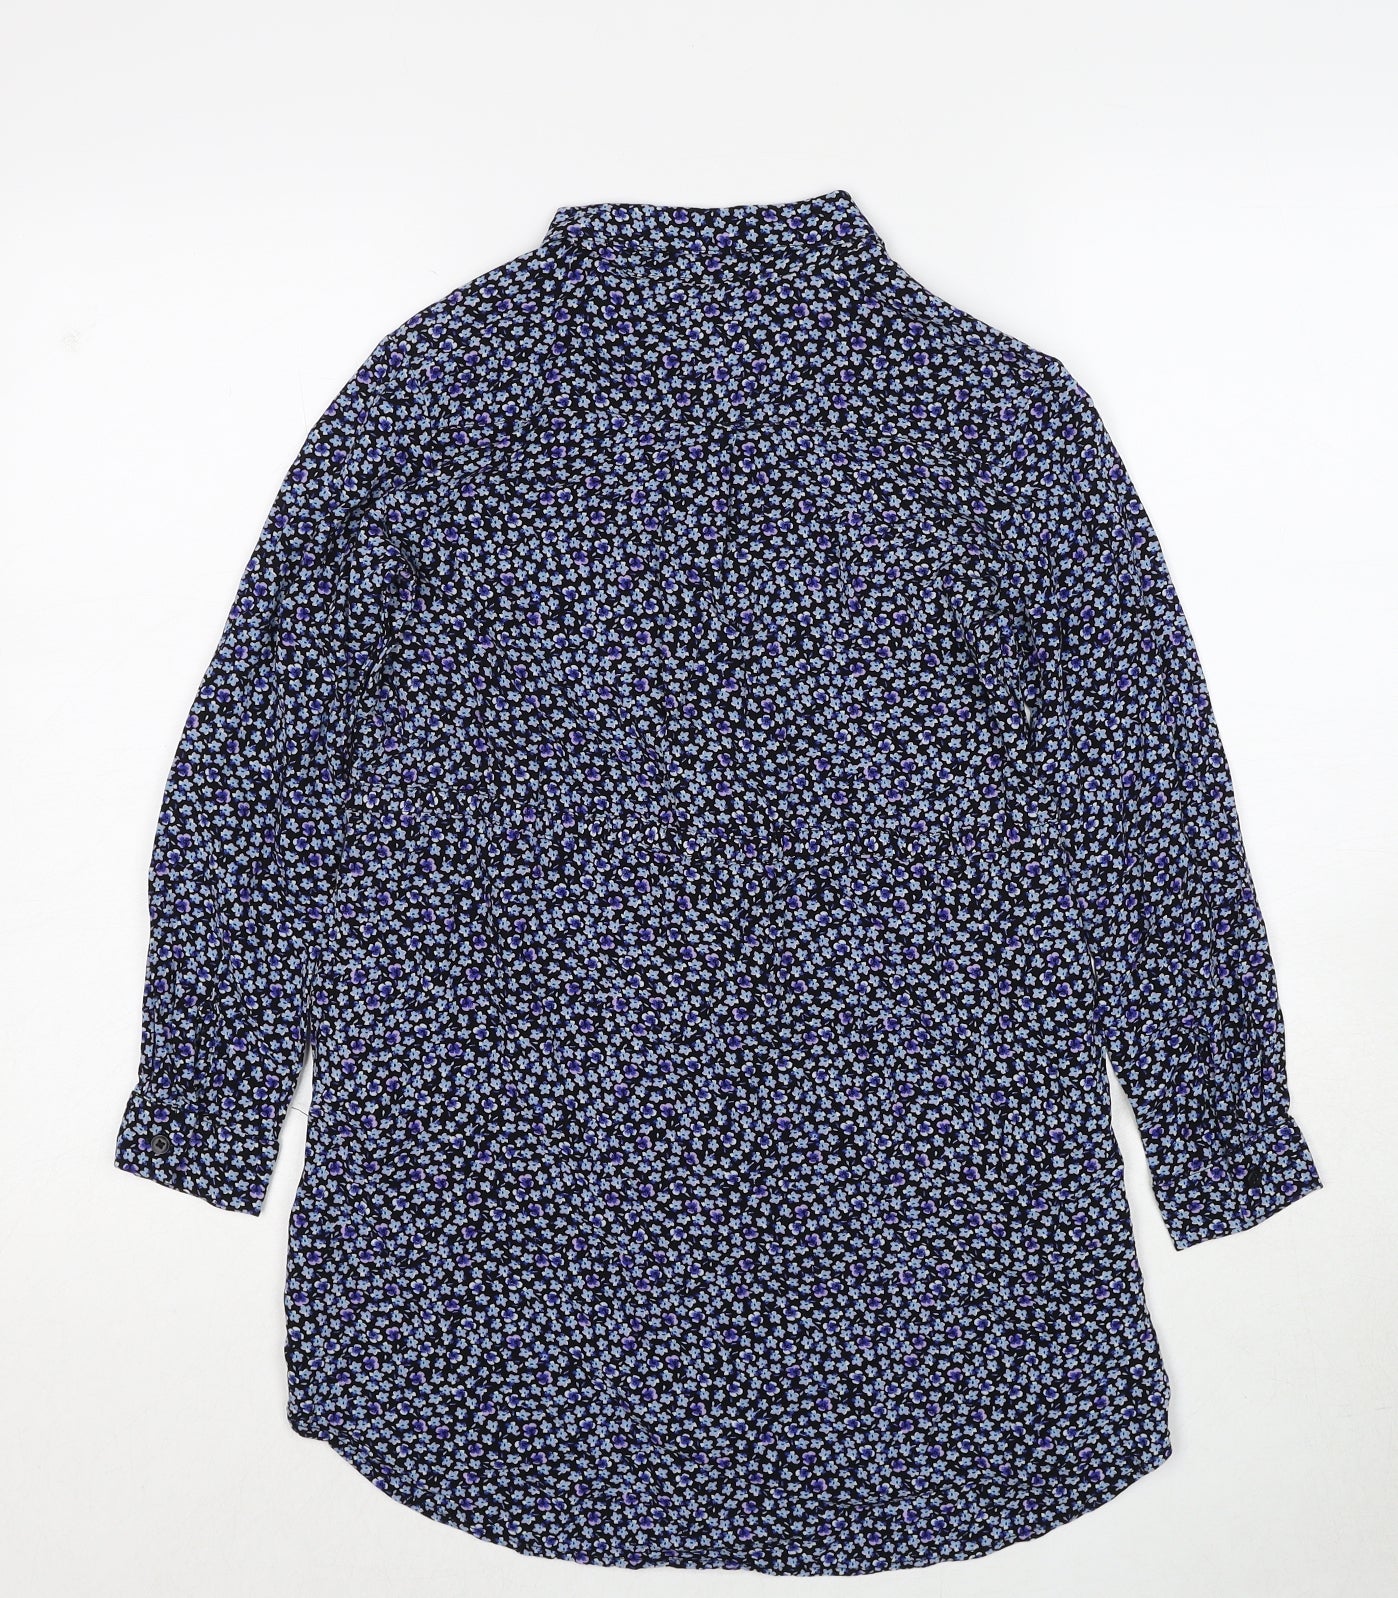 Zara Girls Blue Geometric Viscose Shirt Dress Size 9-10 Years Collared Button